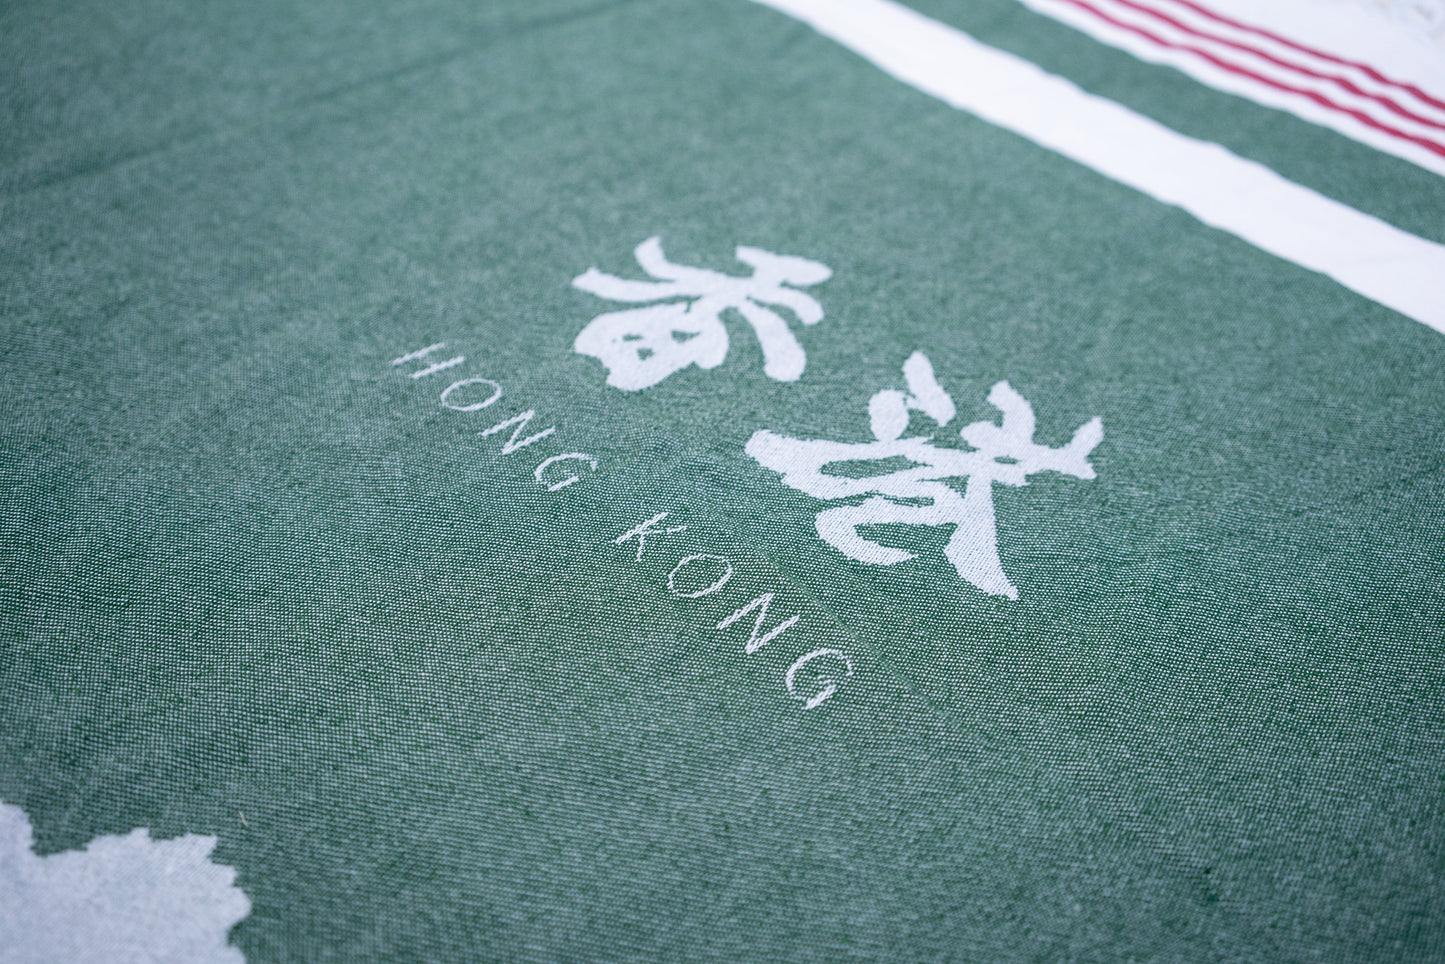 Hong Kong Towel Green - tinyislandmaps